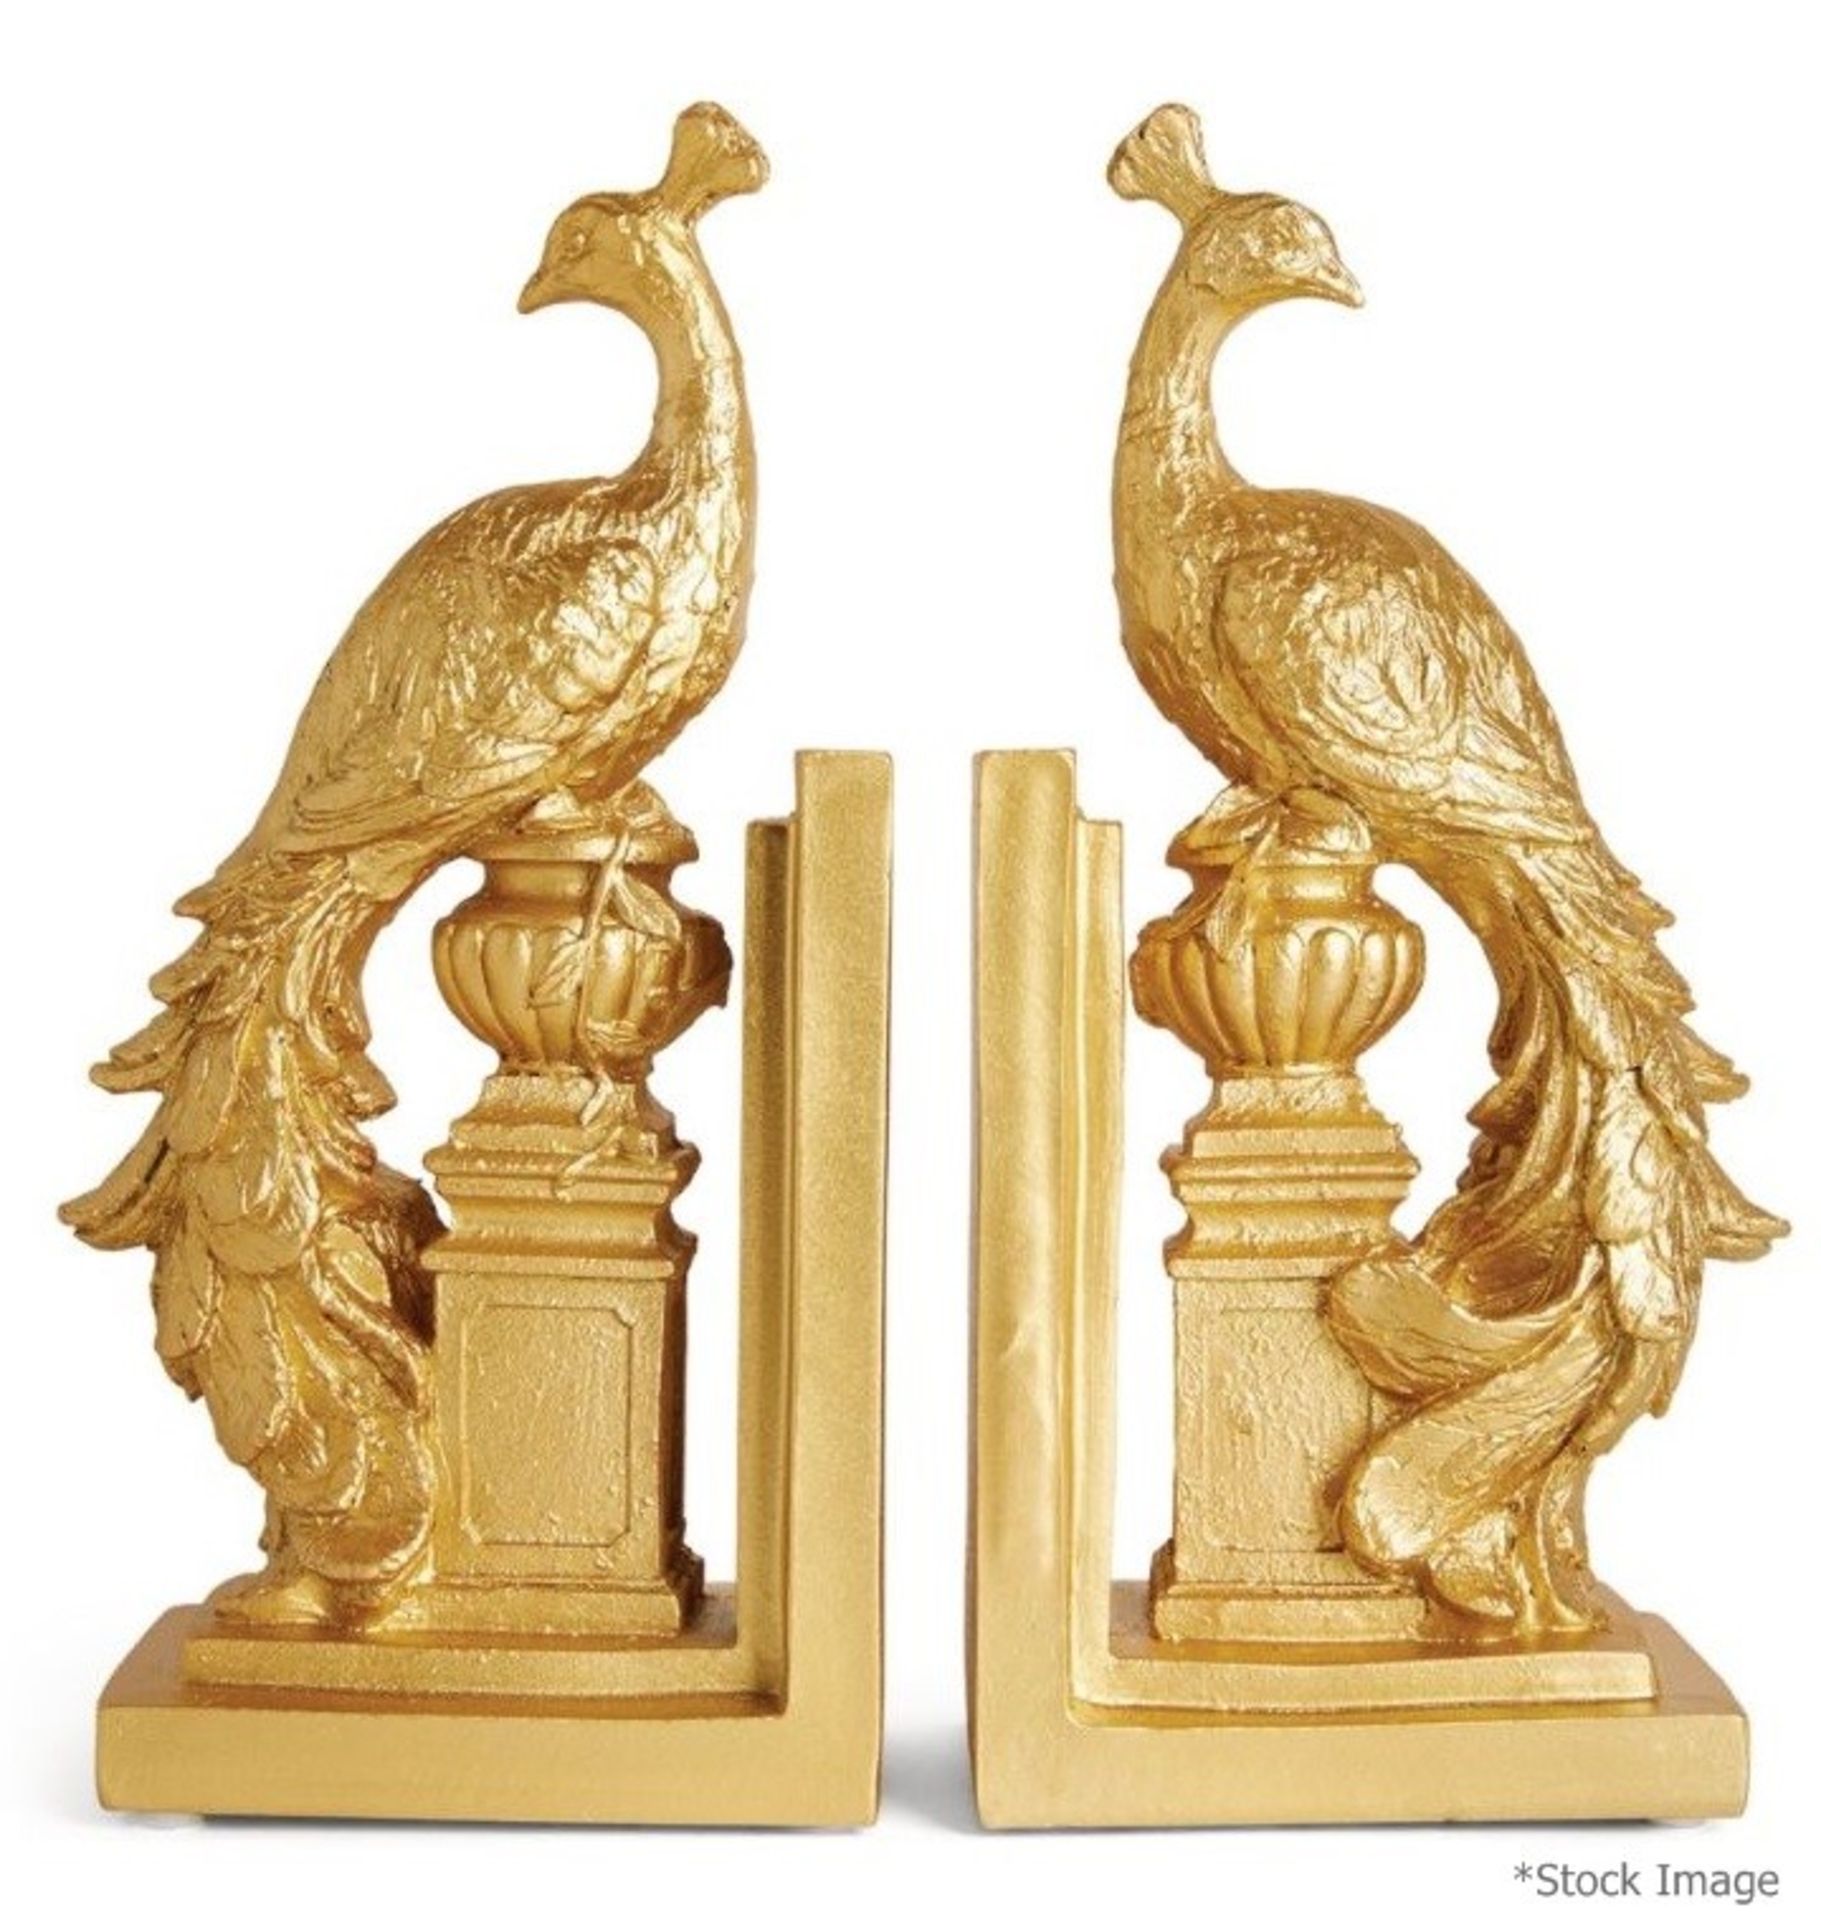 1 x GISELA GRAHAM Peacock Bookends (Set of 2) - Original Price £60.00 - Unused Boxed Stock - Ref: